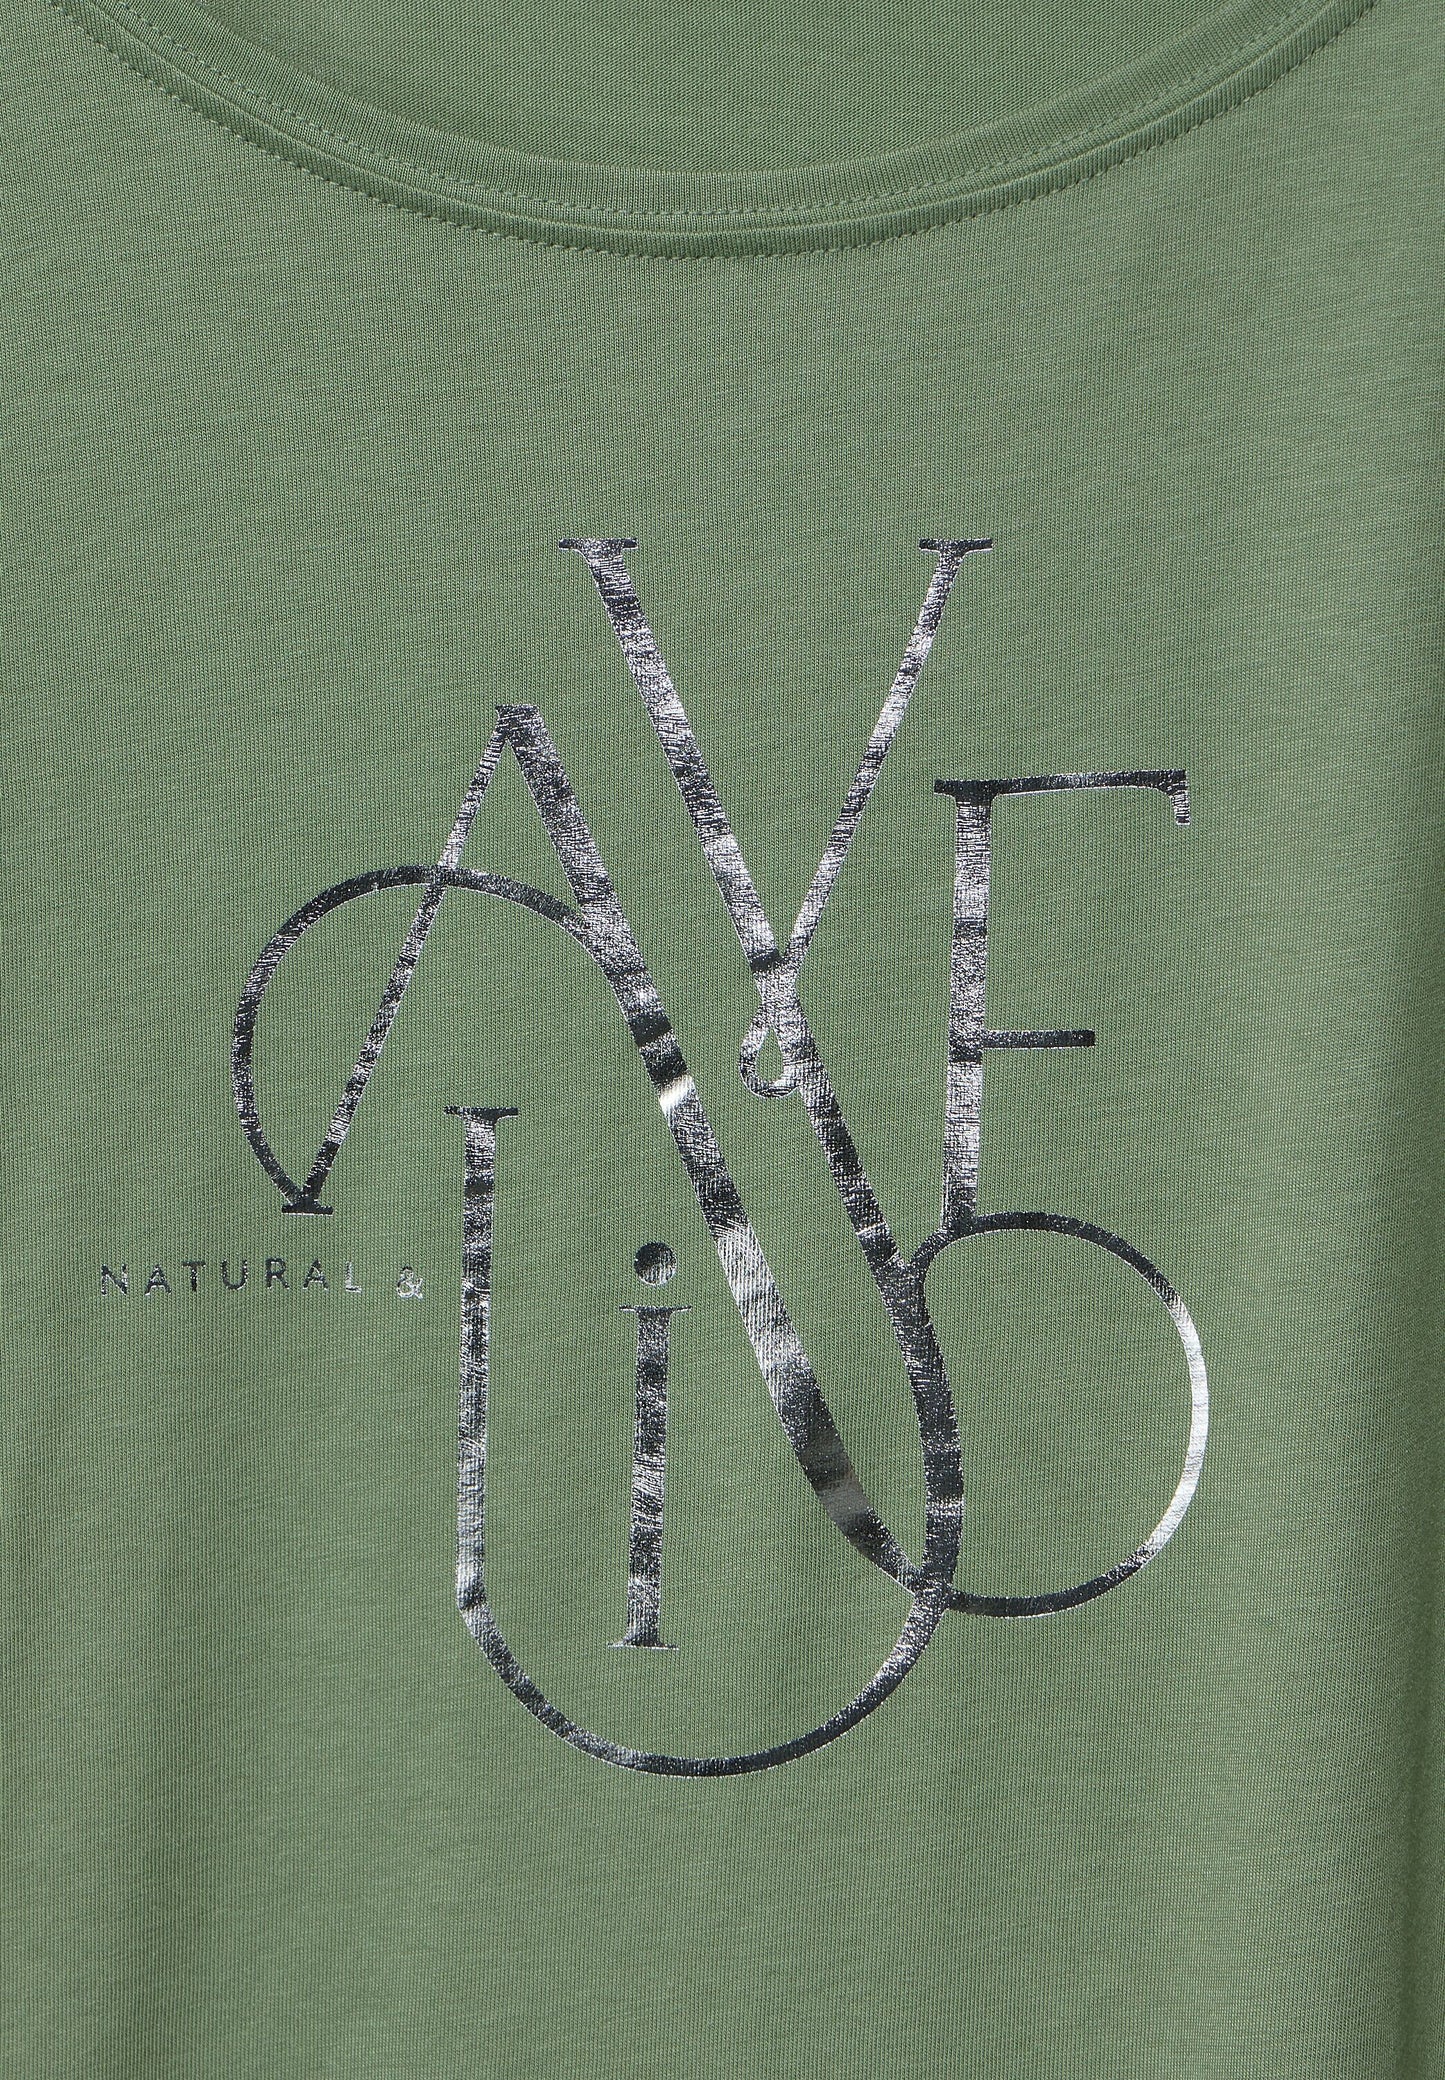 Street One - T-Shirt mit Wording - dry salvia green